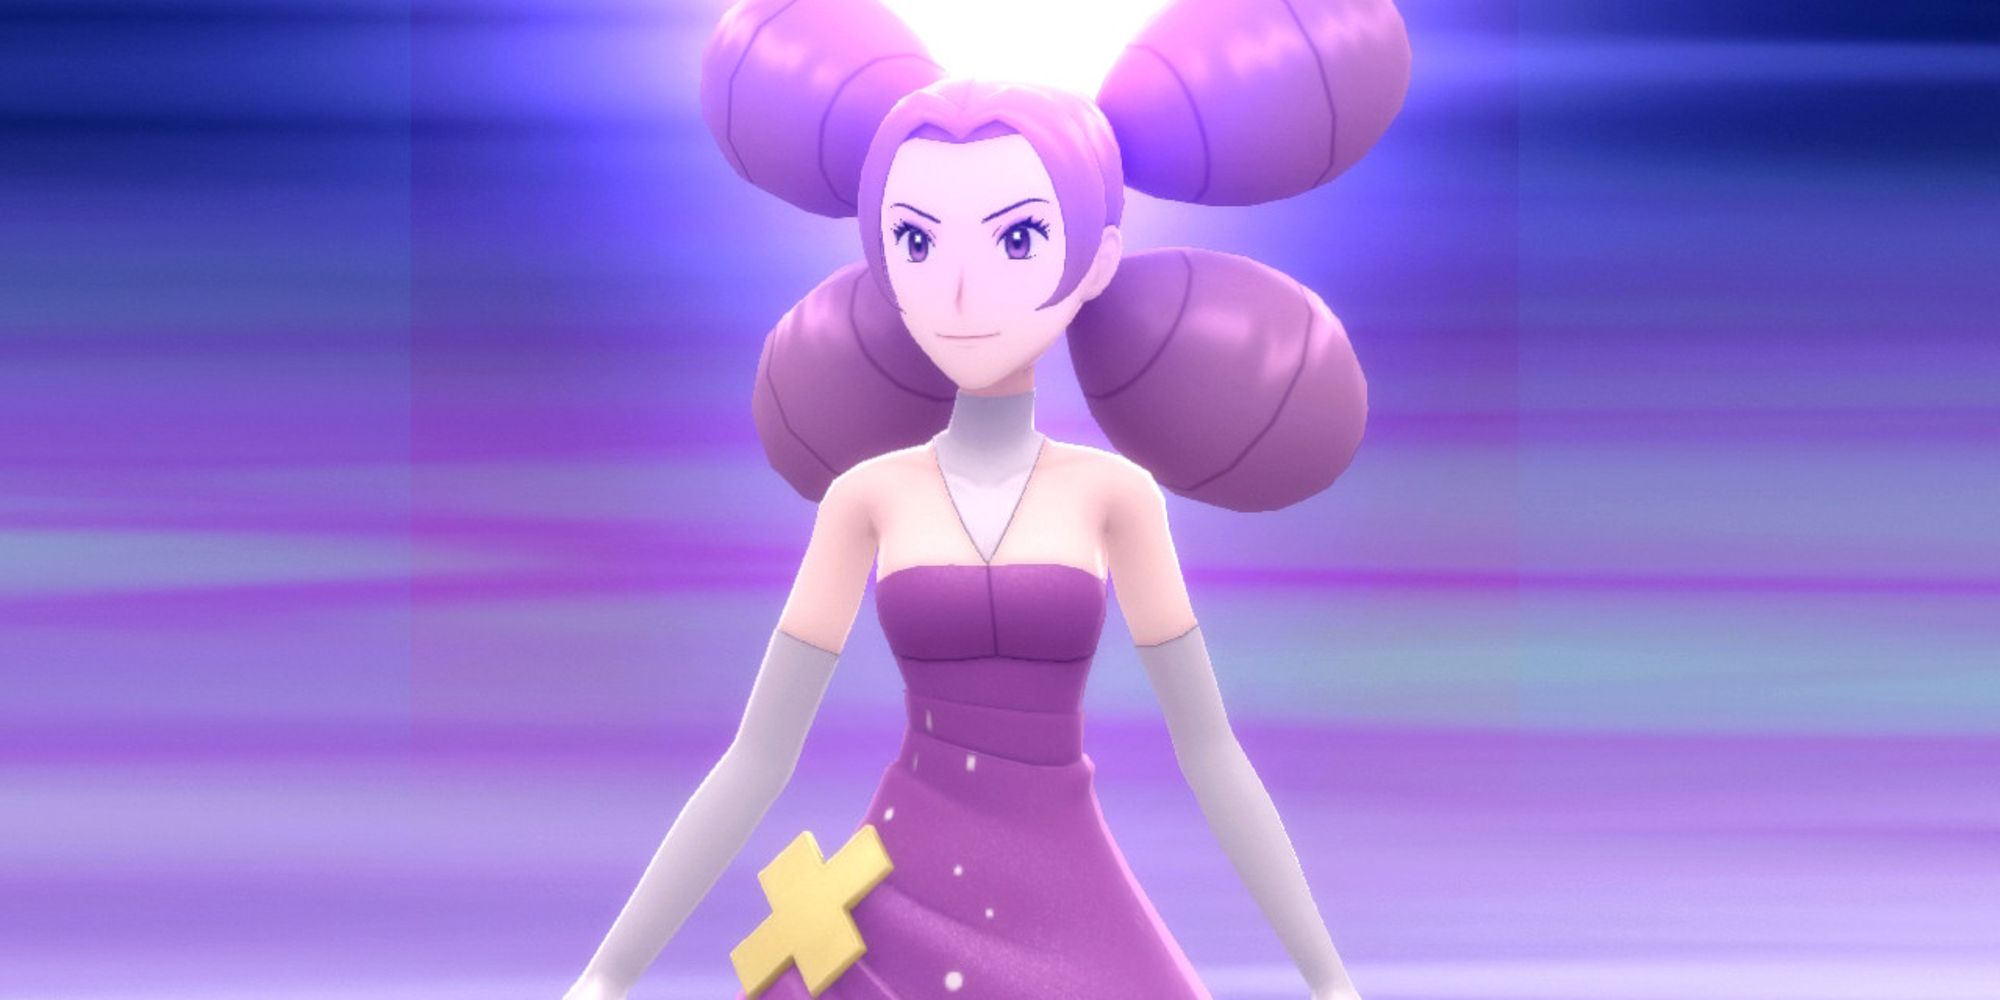 Fantina standing still before her battle in Pokémon BDSP